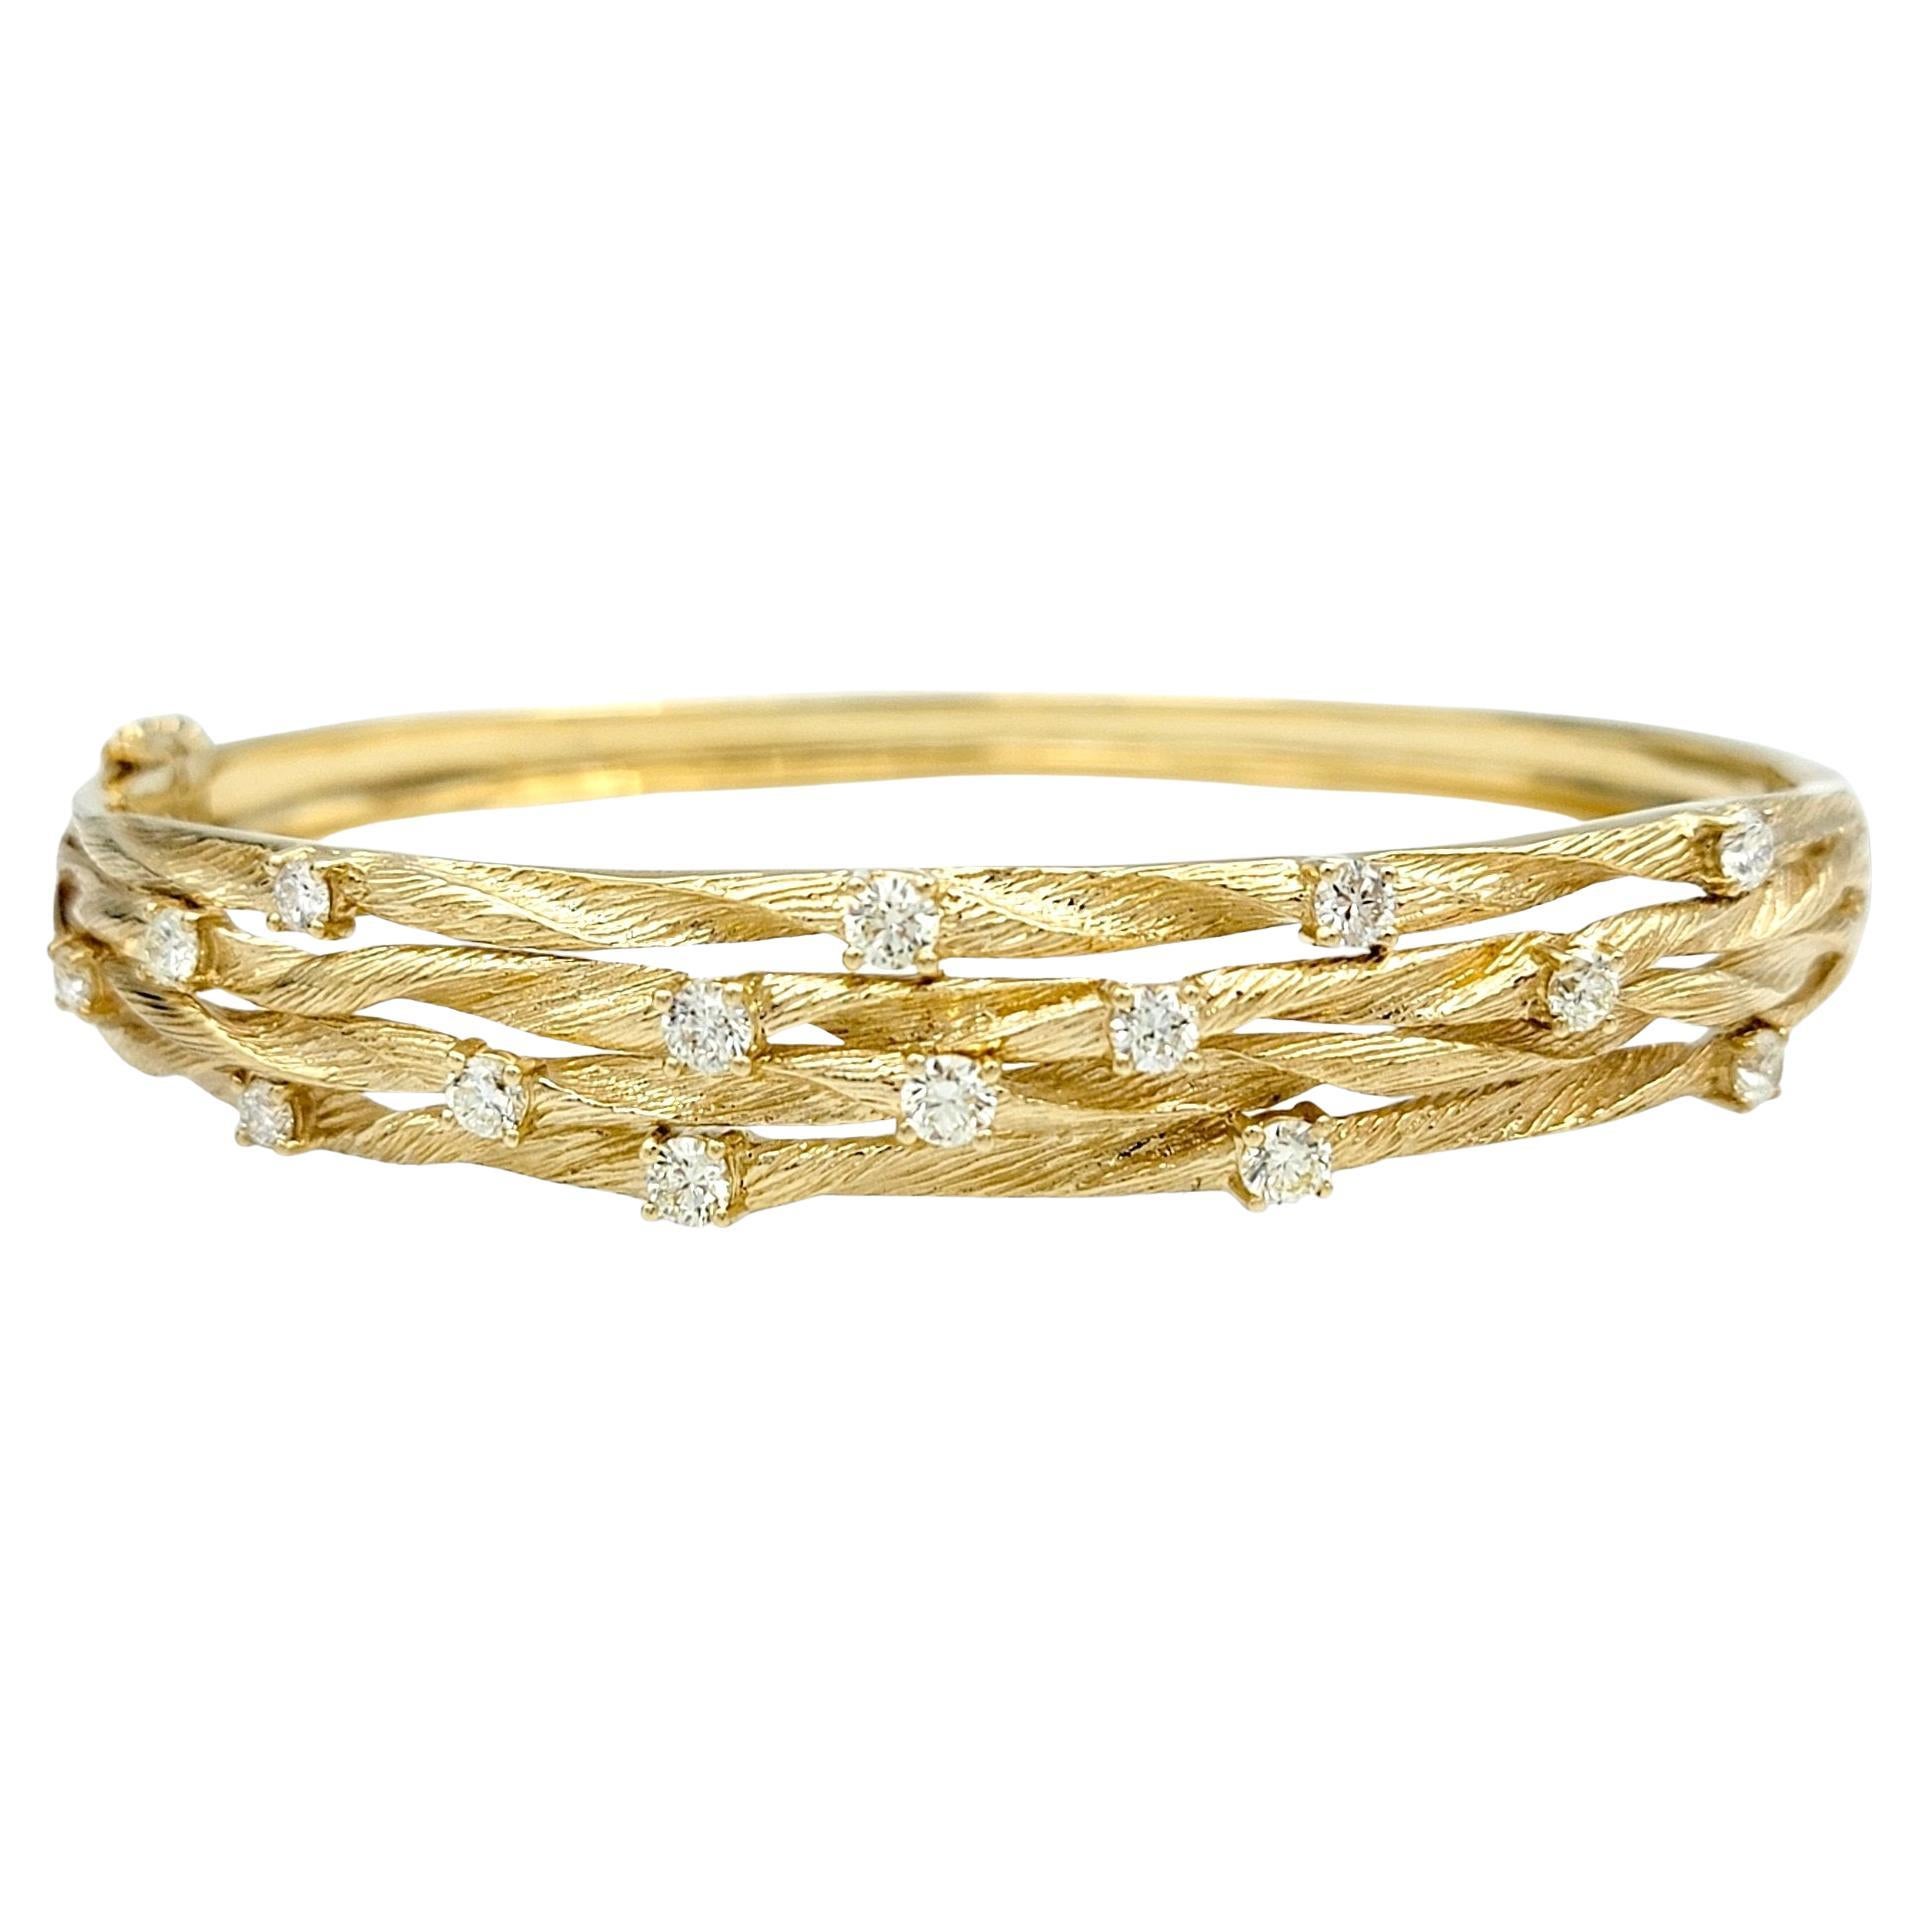 Effy D'oro Diamond Twisted Rope Design Bangle Bracelet in 14 Karat Yellow Gold